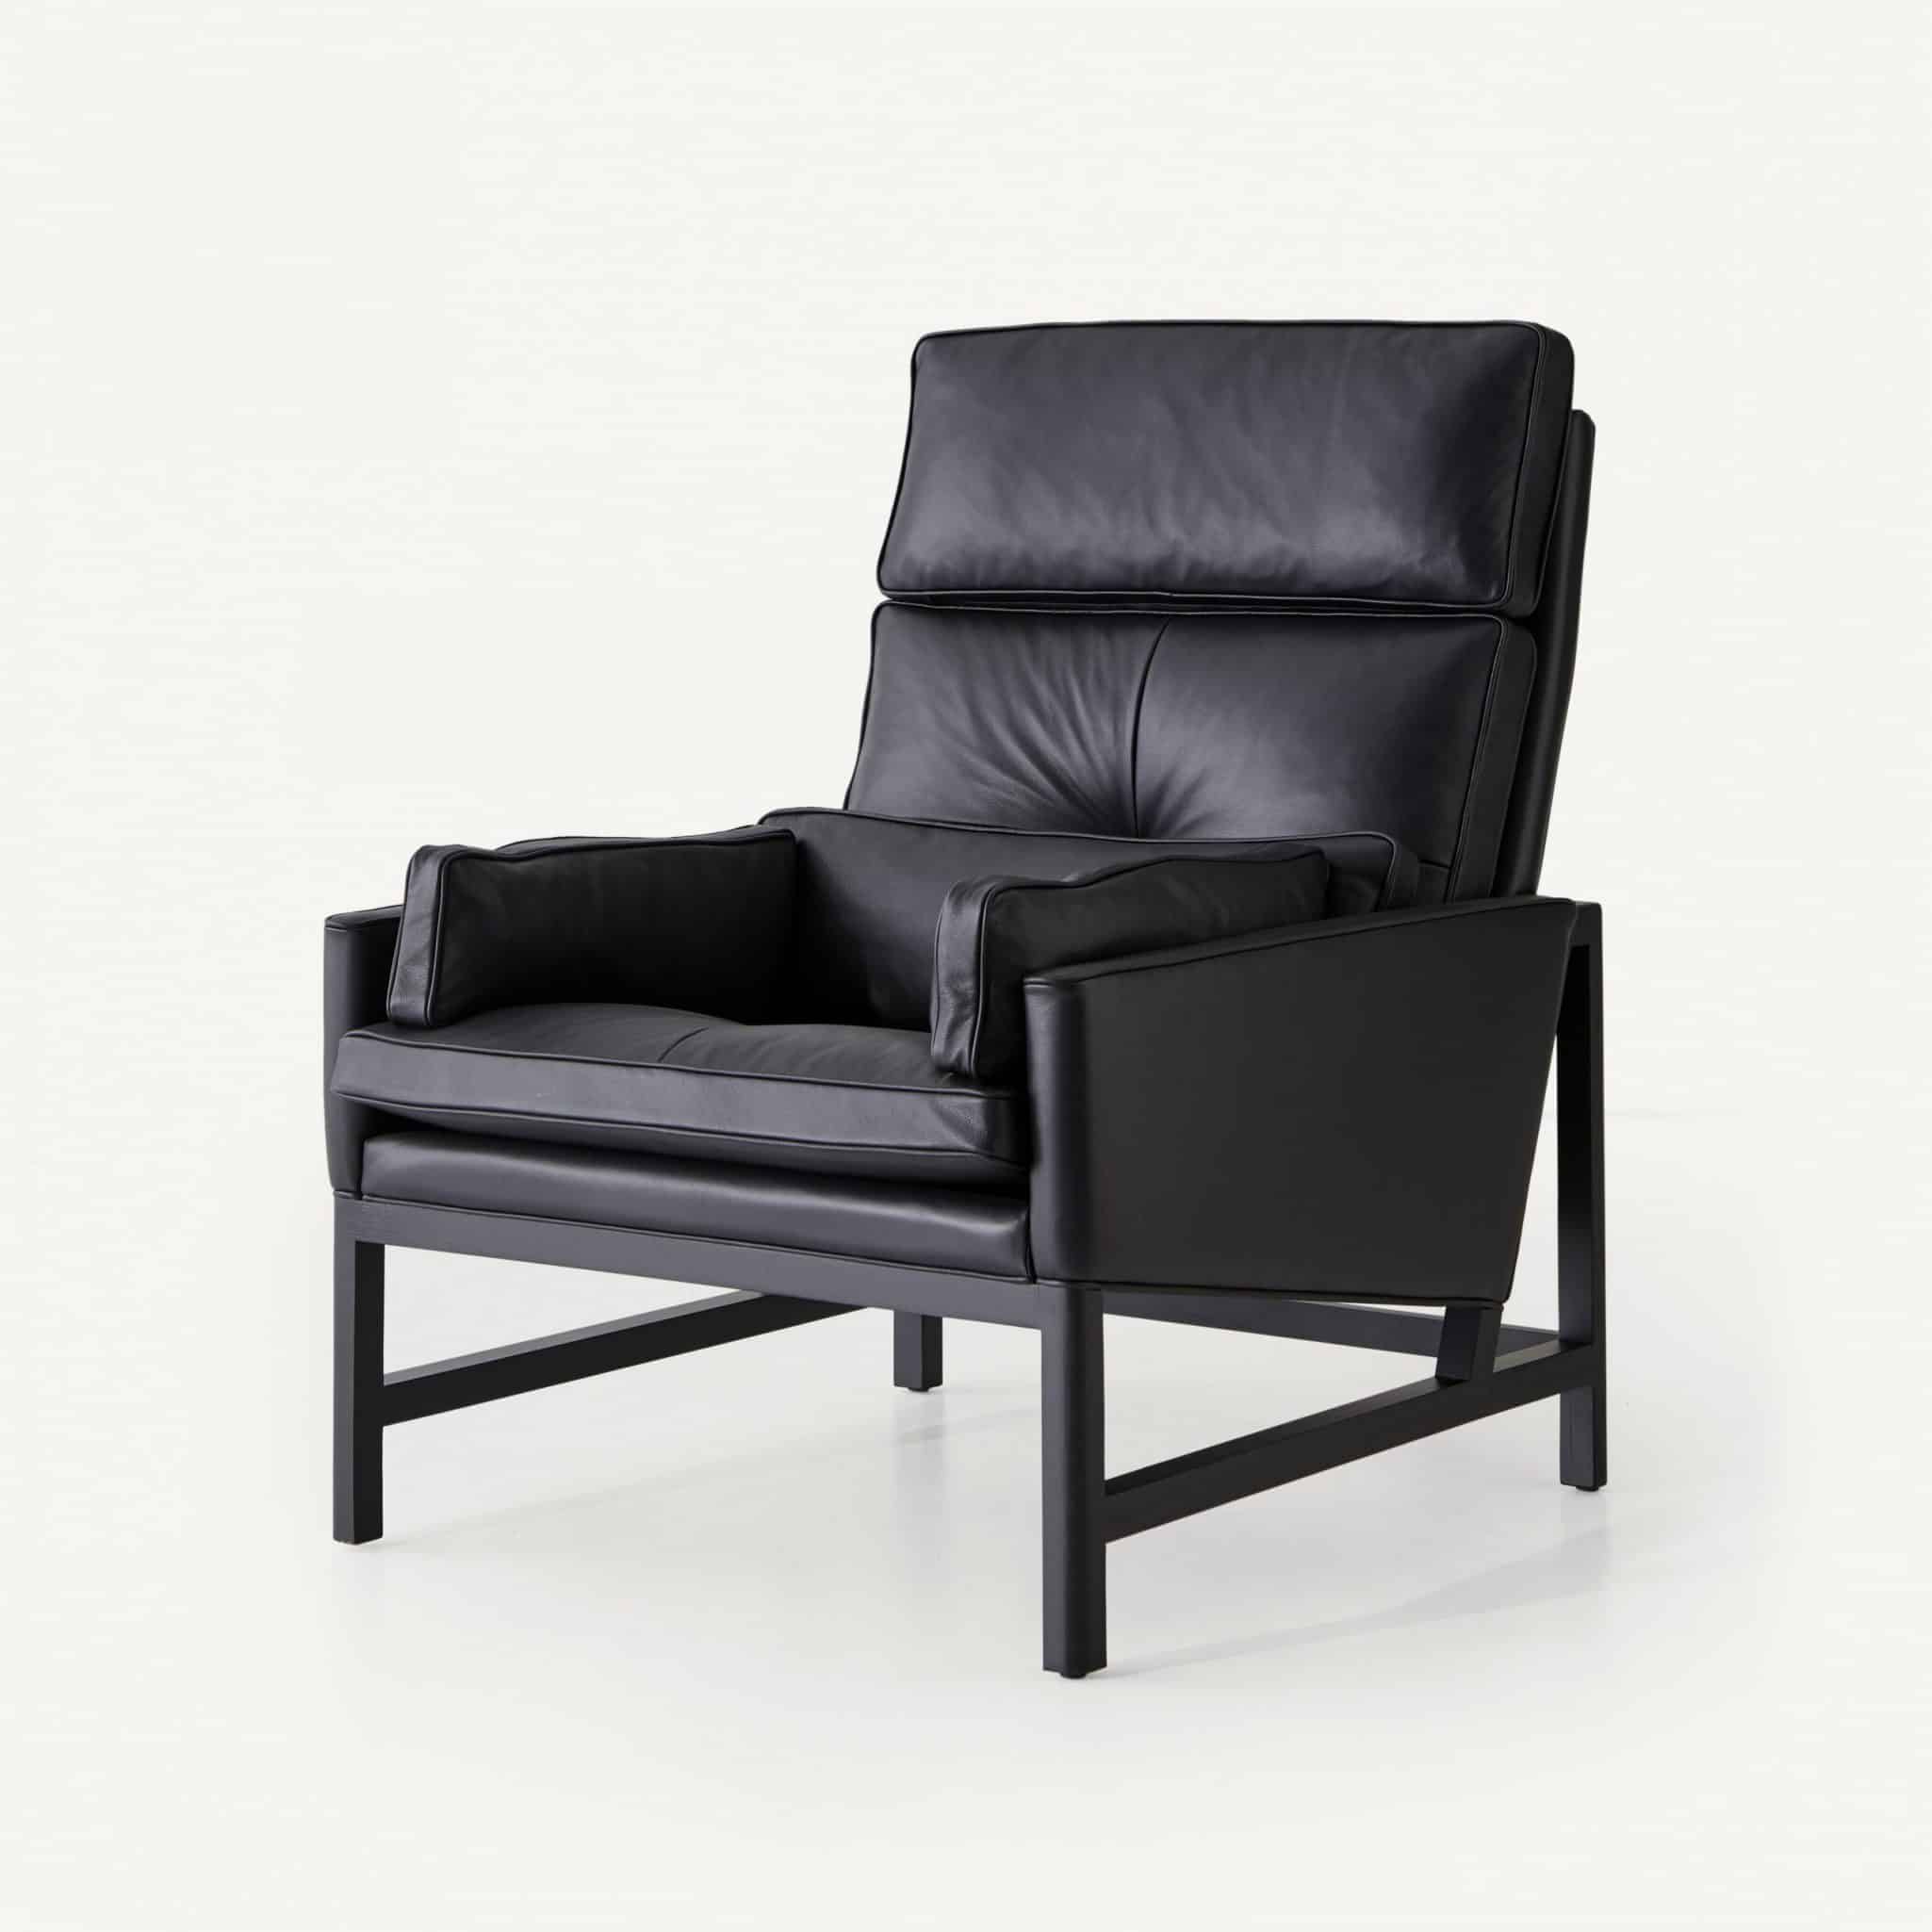 CB-510 High Back Lounge Chair_Ebonized Ash_Elmotique 99001 Black Leather_BassamFellows_01